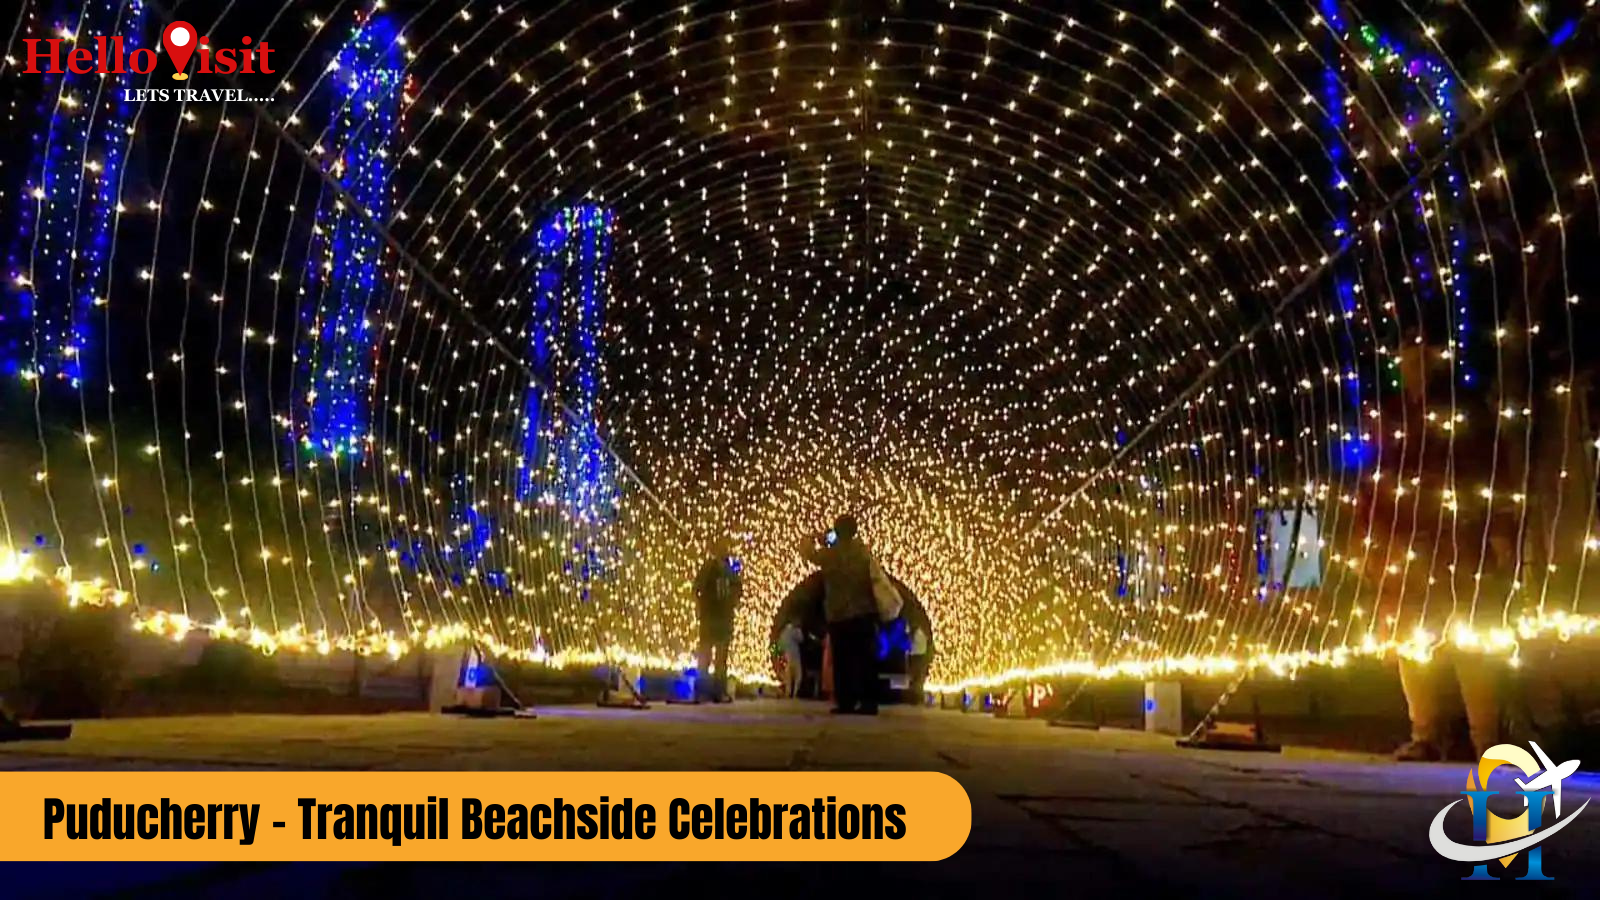 Puducherry - Tranquil Beachside Celebrations